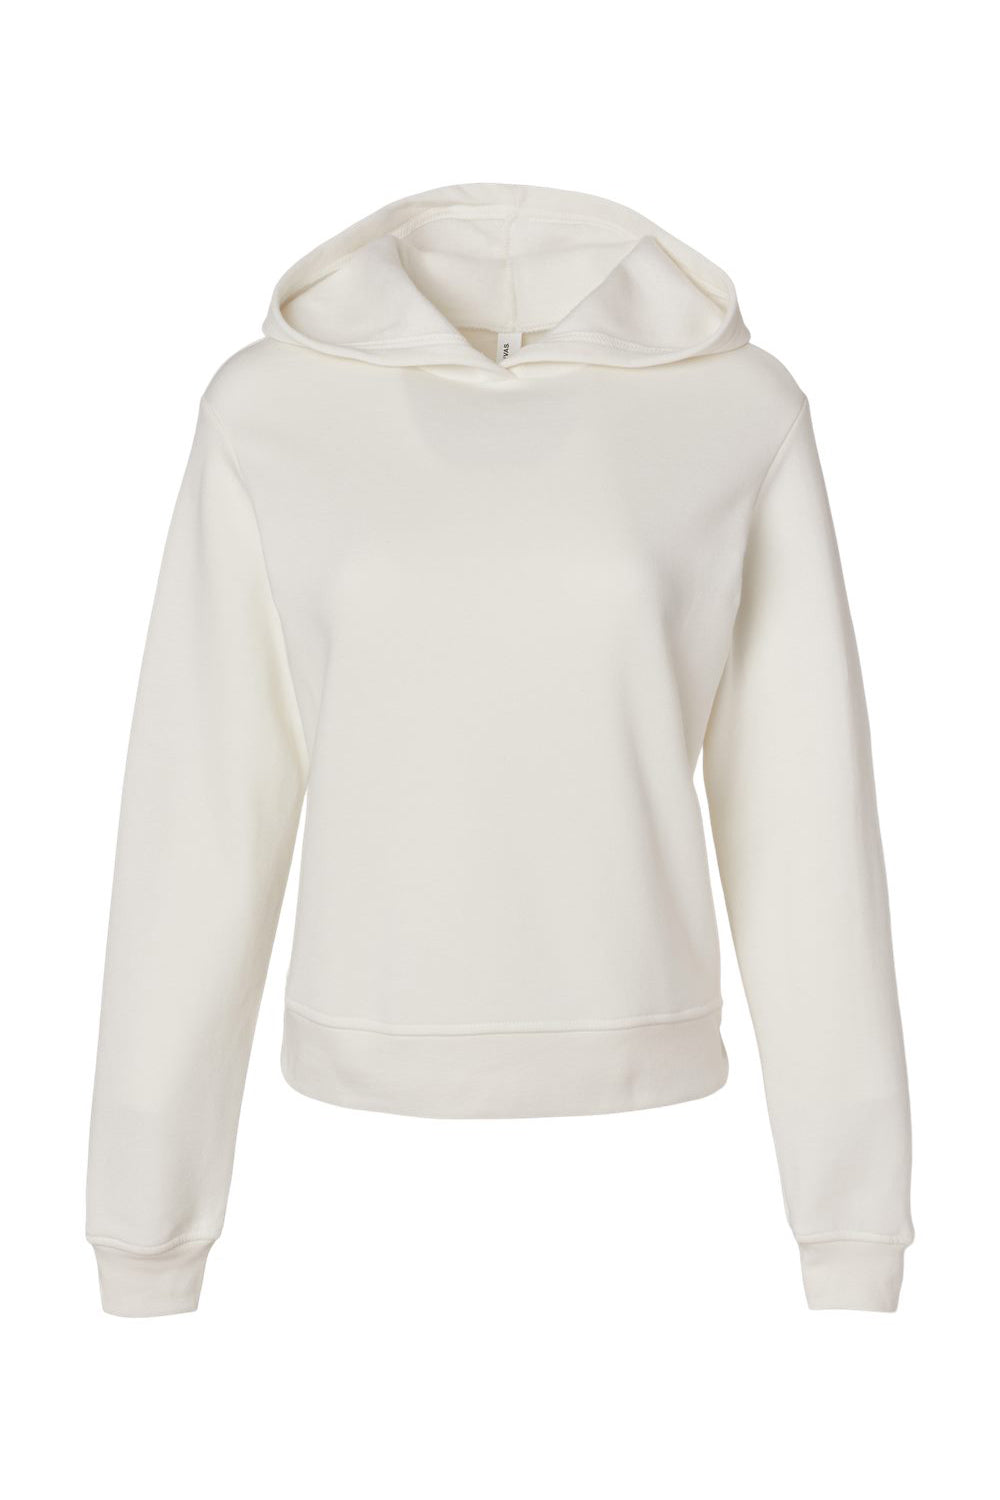 Bella + Canvas 7519 Womens Classic Hooded Sweatshirt Hoodie Vintage White Flat Front